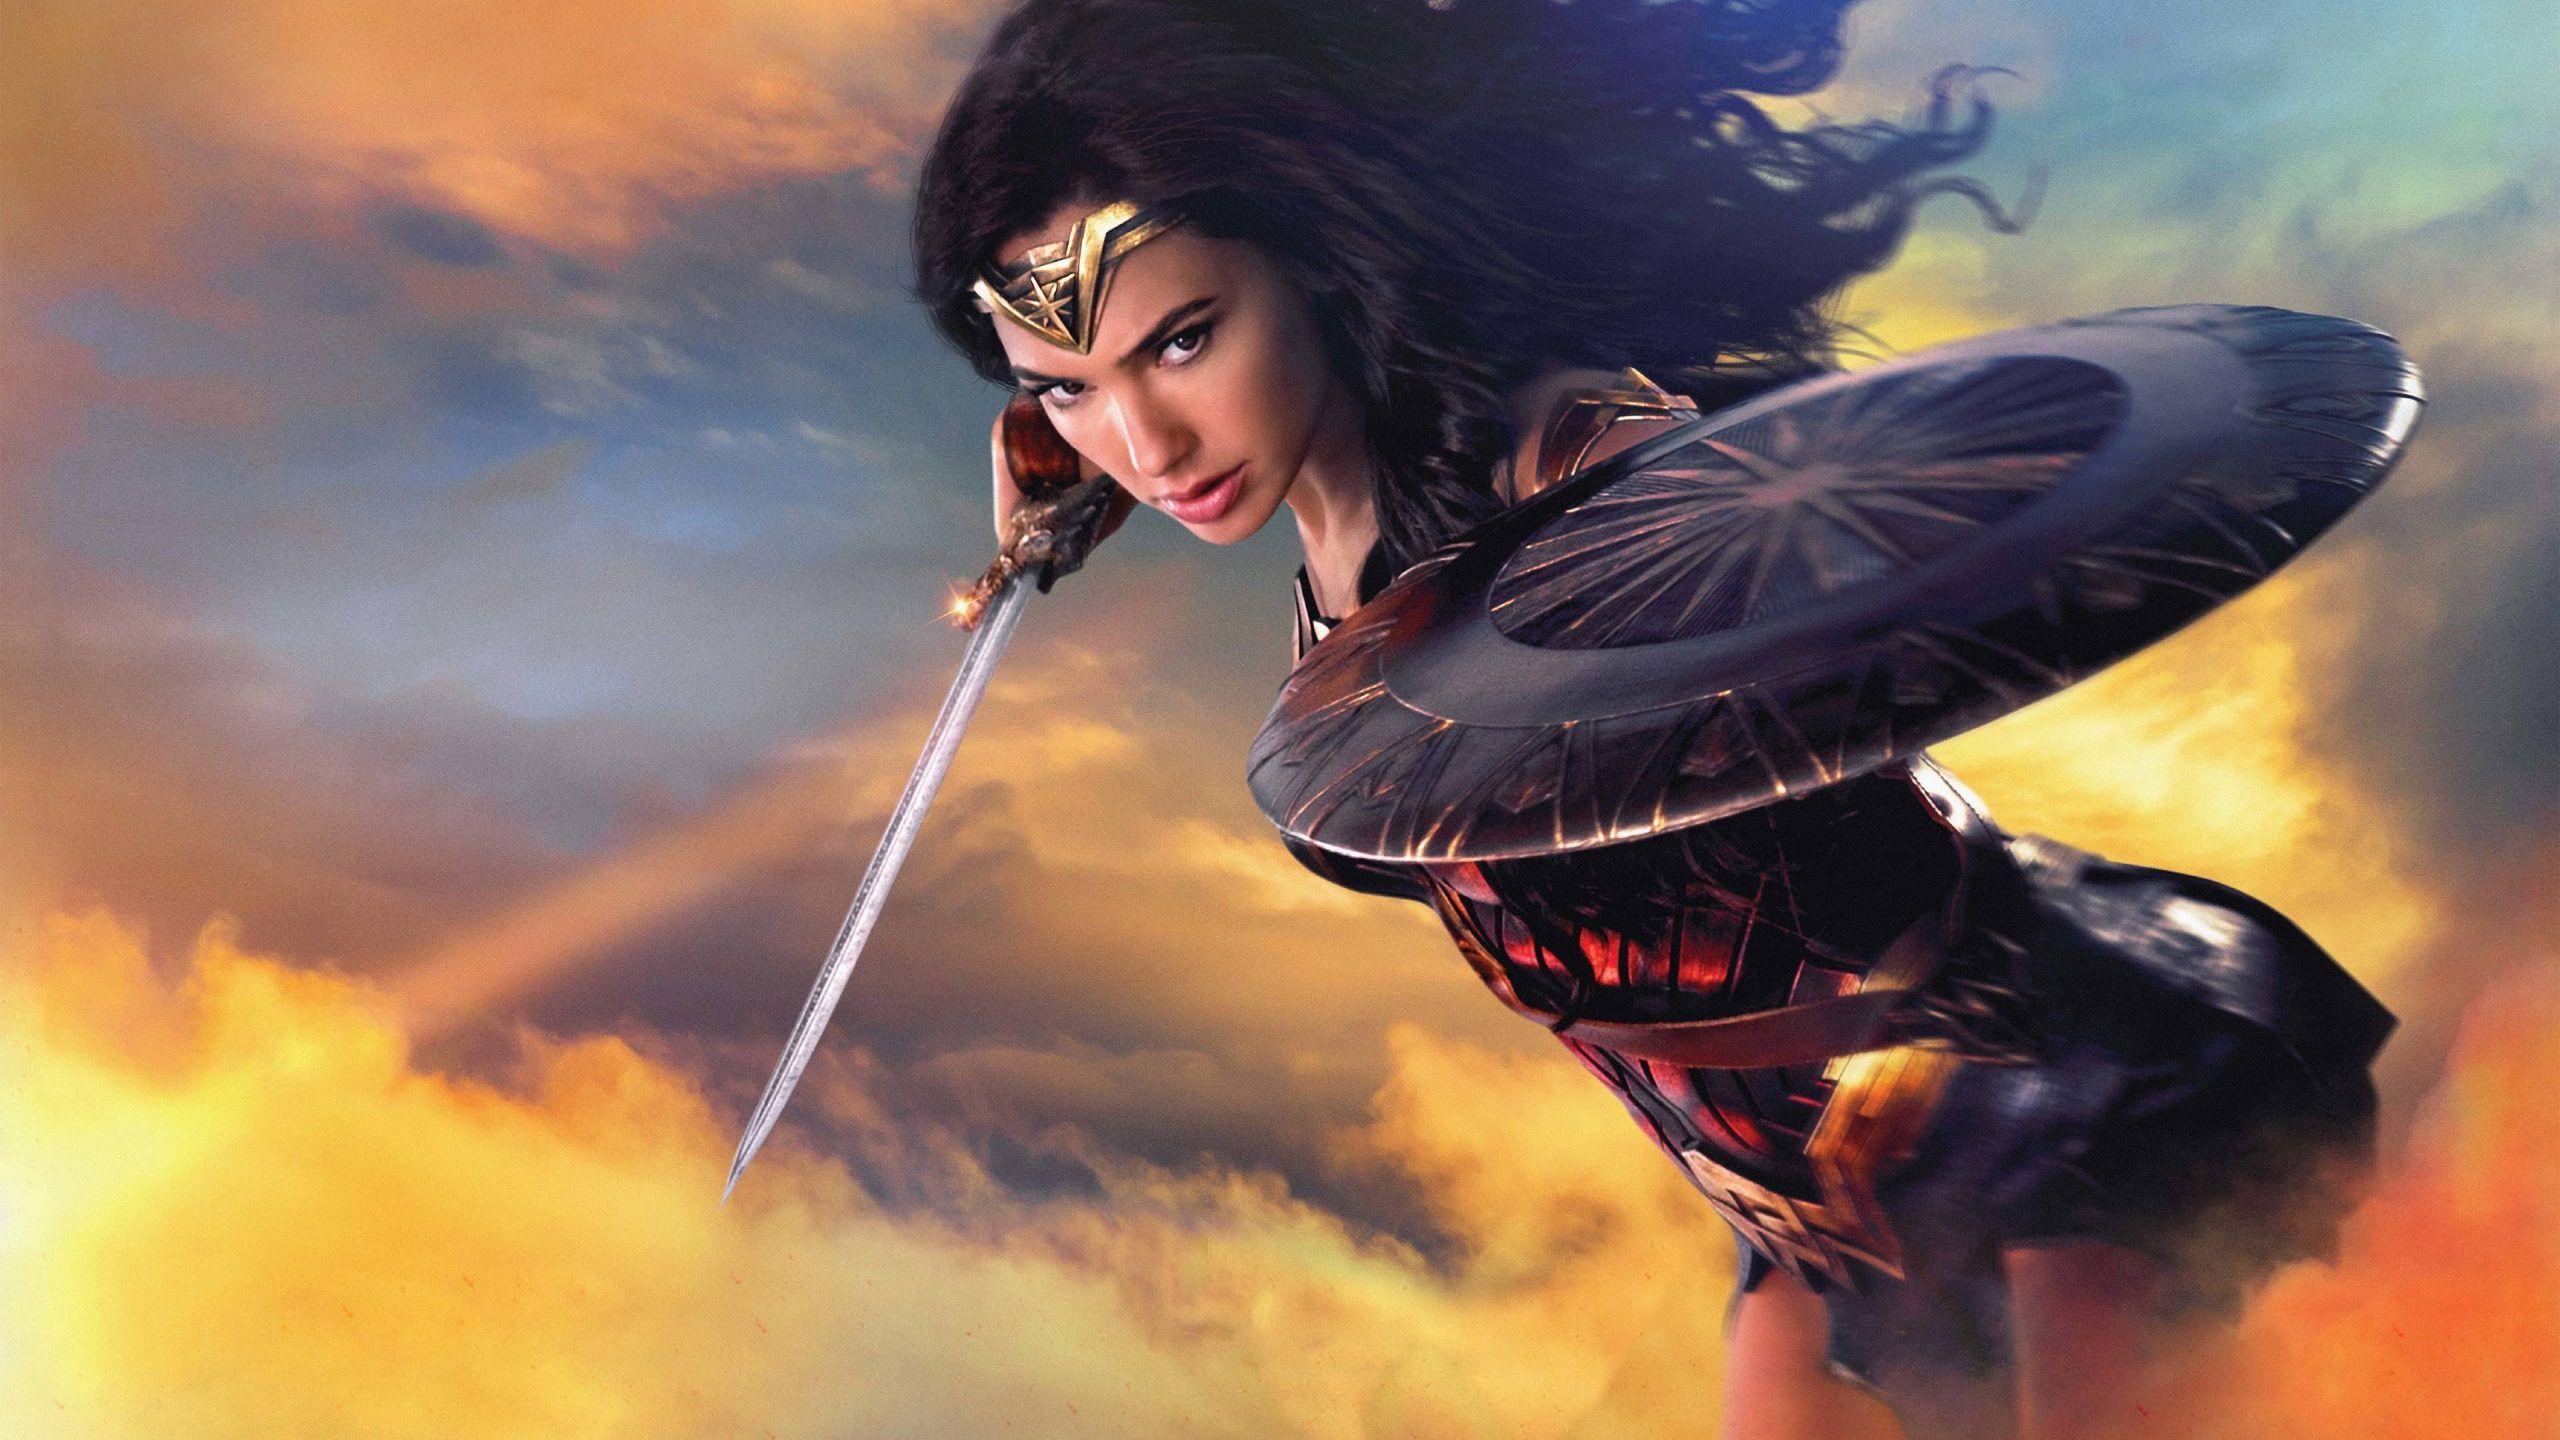 Wonder Woman Gal Gadot Wallpaper For Desktop in HD 4K Size